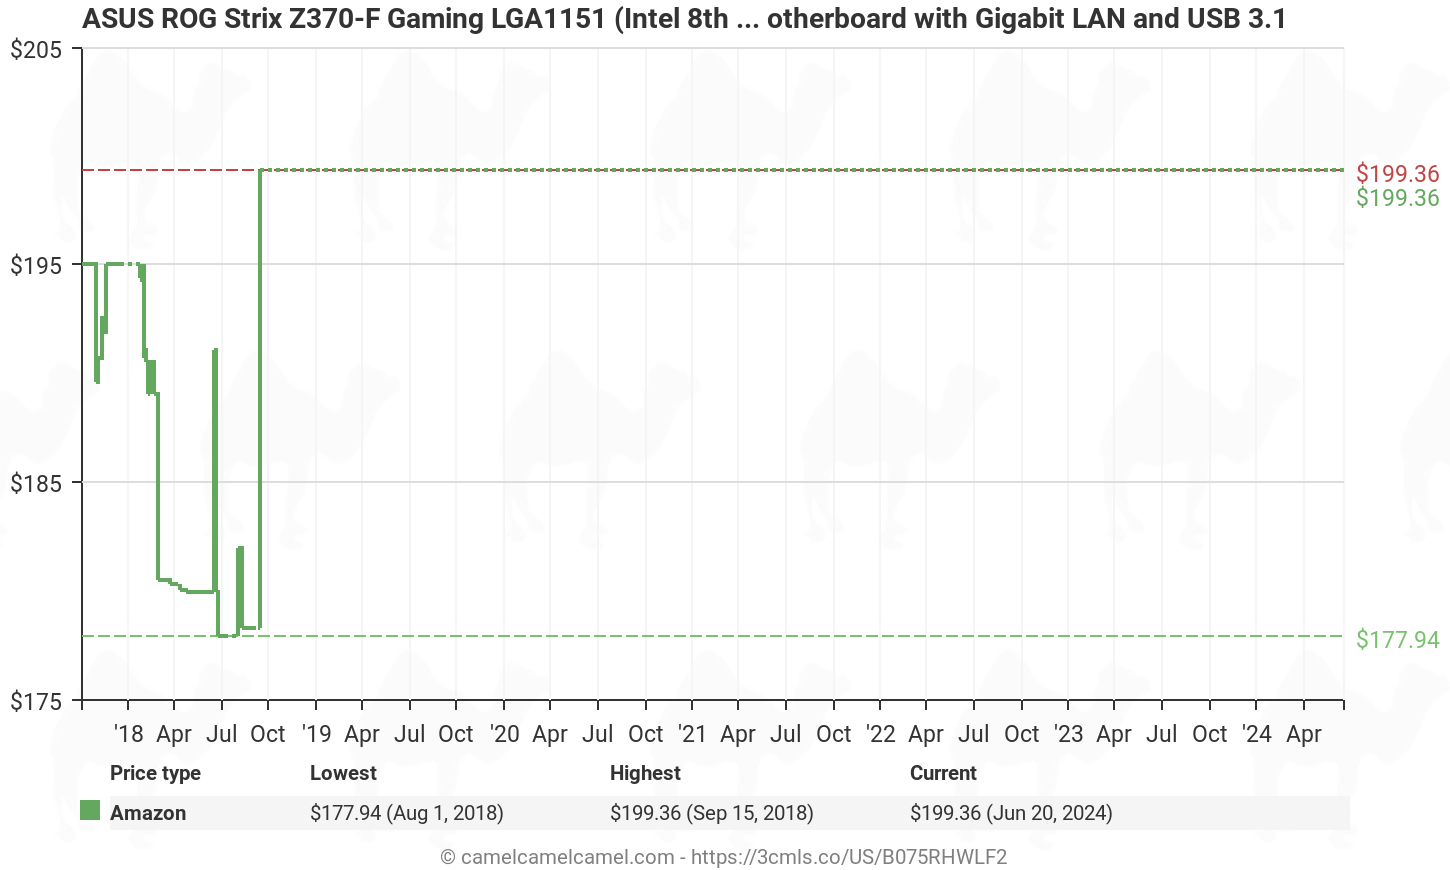 Asus Rog Strix Z370 F Gaming Lga1151 Ddr4 Dp Hdmi Dvi M 2 Z370 Atx Motherboard With Gigabit Lan And Usb 3 1 For 8th Generation Intel Core Processors B075rhwlf2 Amazon Price Tracker